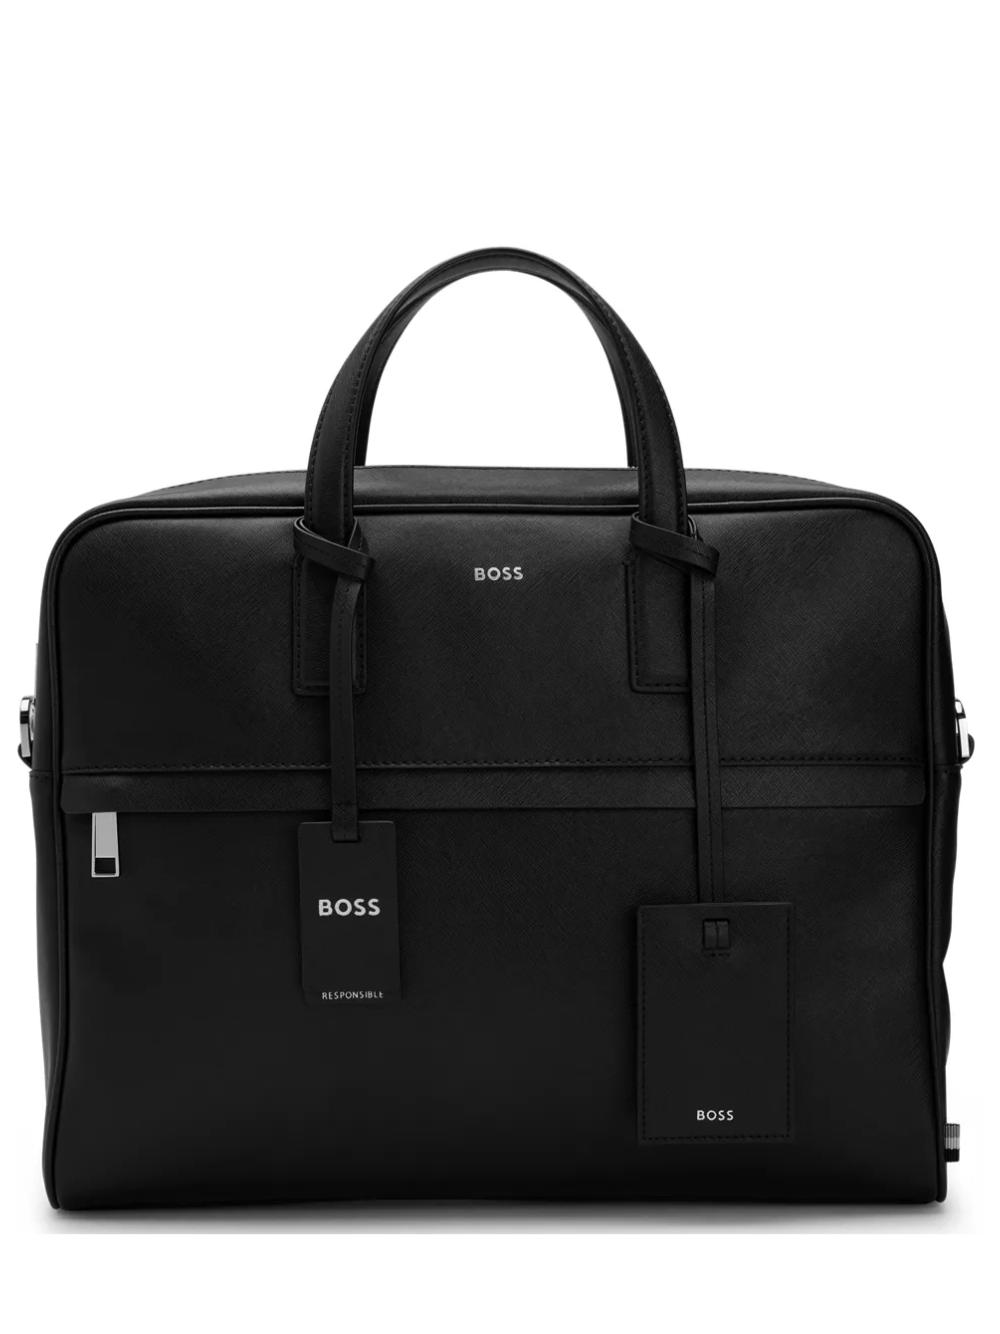 BOSS by HUGO BOSS Boss Zair Briefcase Black for Men | Lyst